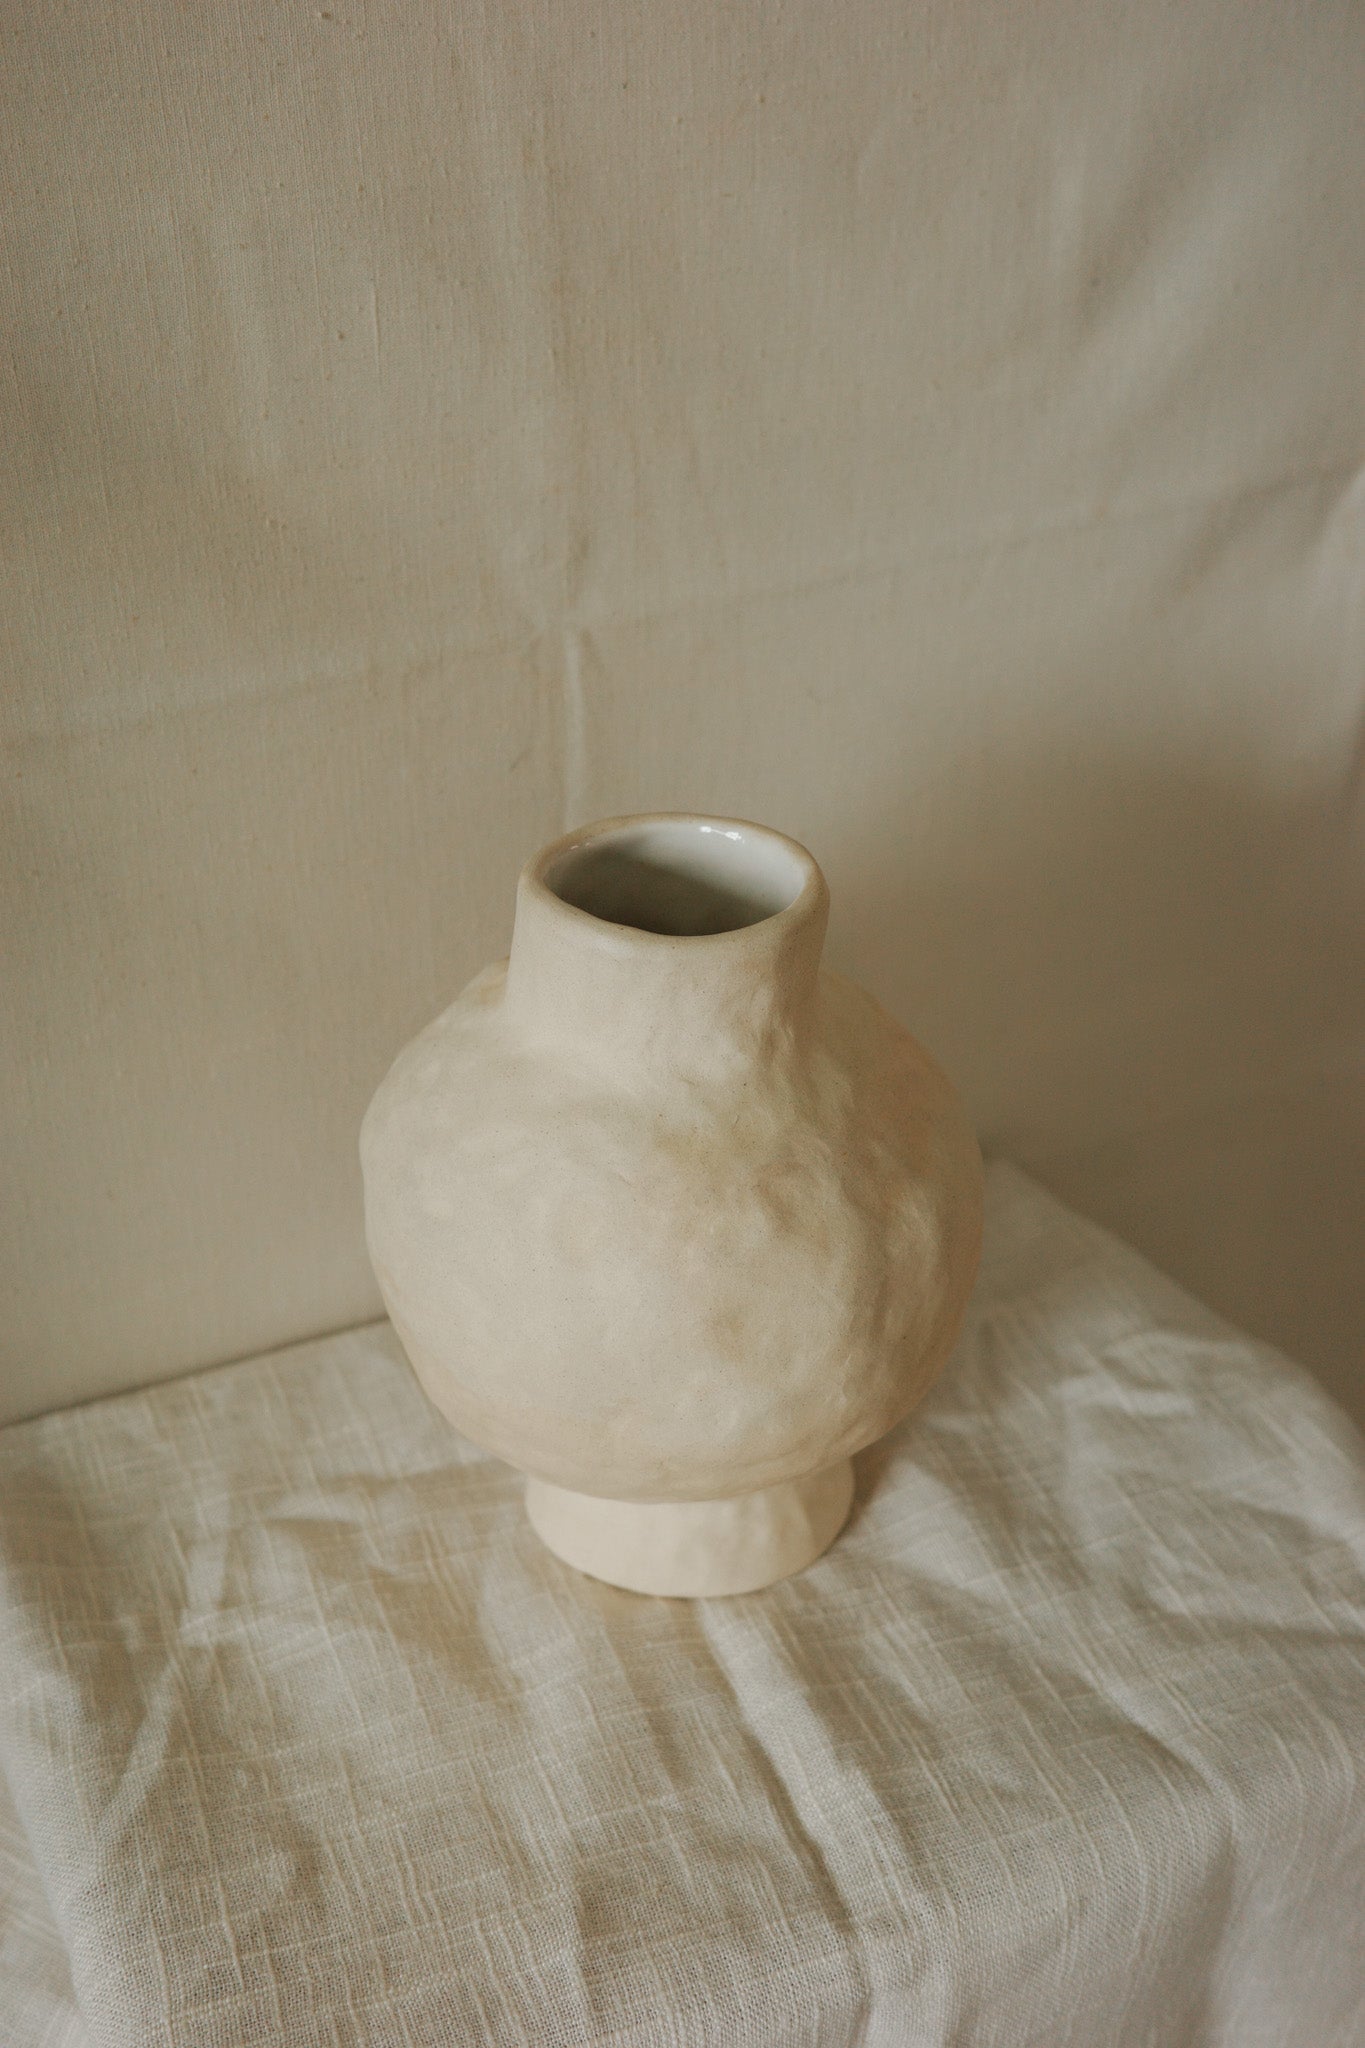 Orb vase